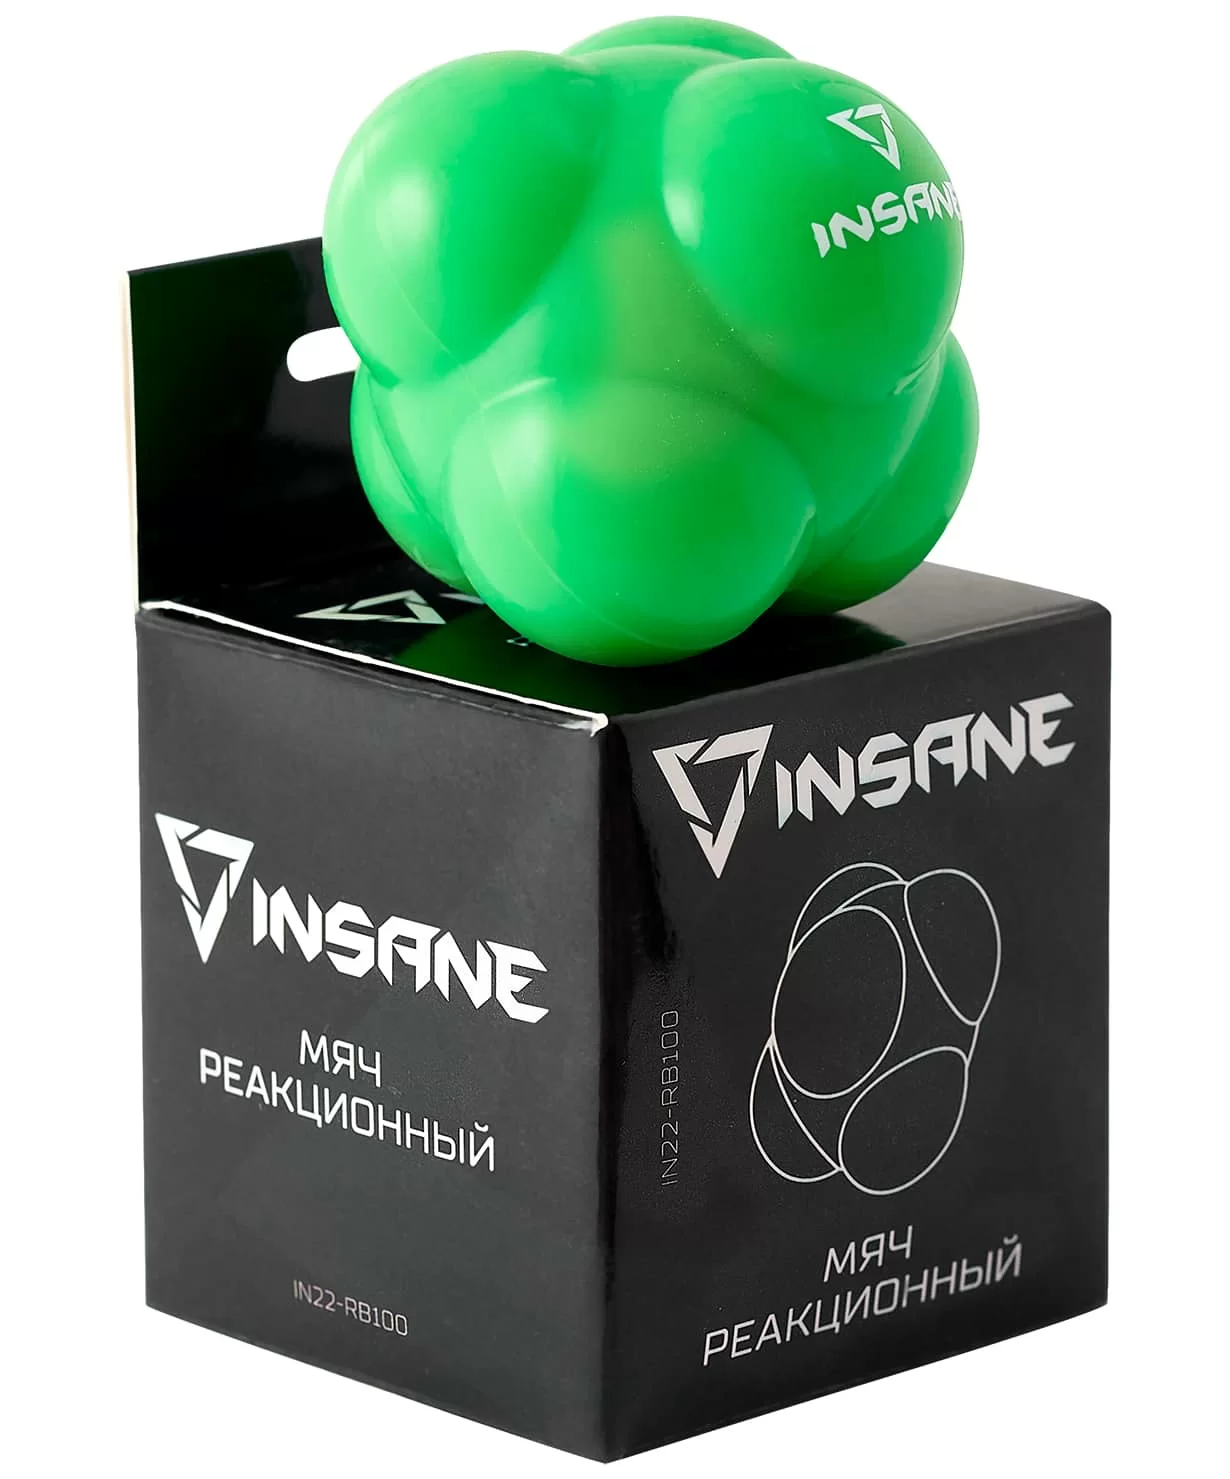 Фото Мяч для трен. реакции Insane IN22-RB100 диам. 6,8 см силикагель зеленый 20909 со склада магазина СпортЕВ